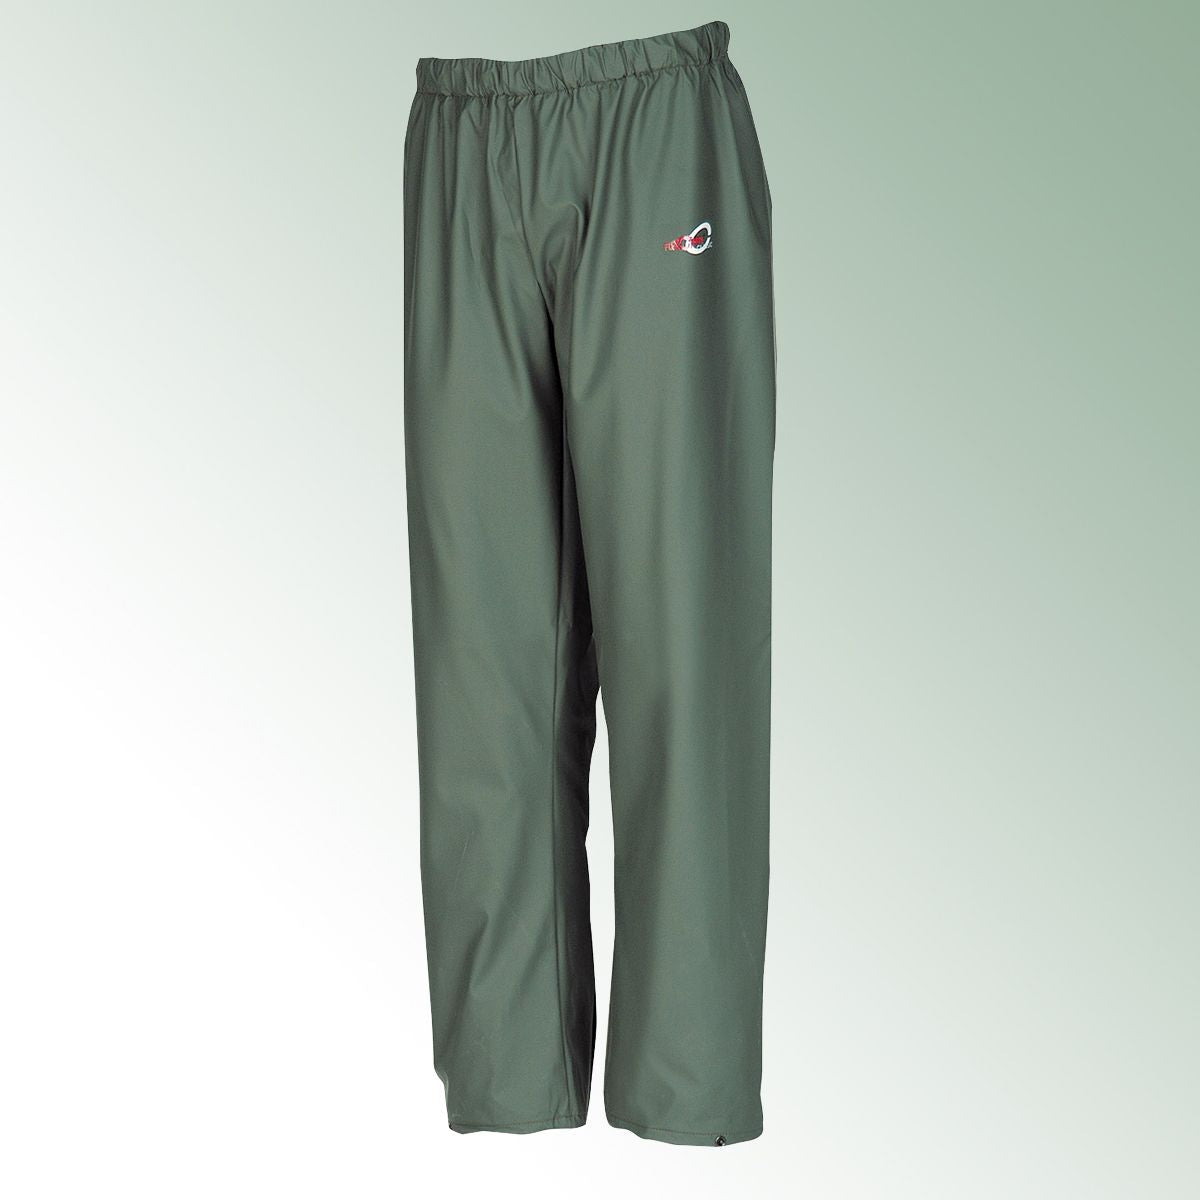 Rain trousers Flexothane size XL - olive green model 4500